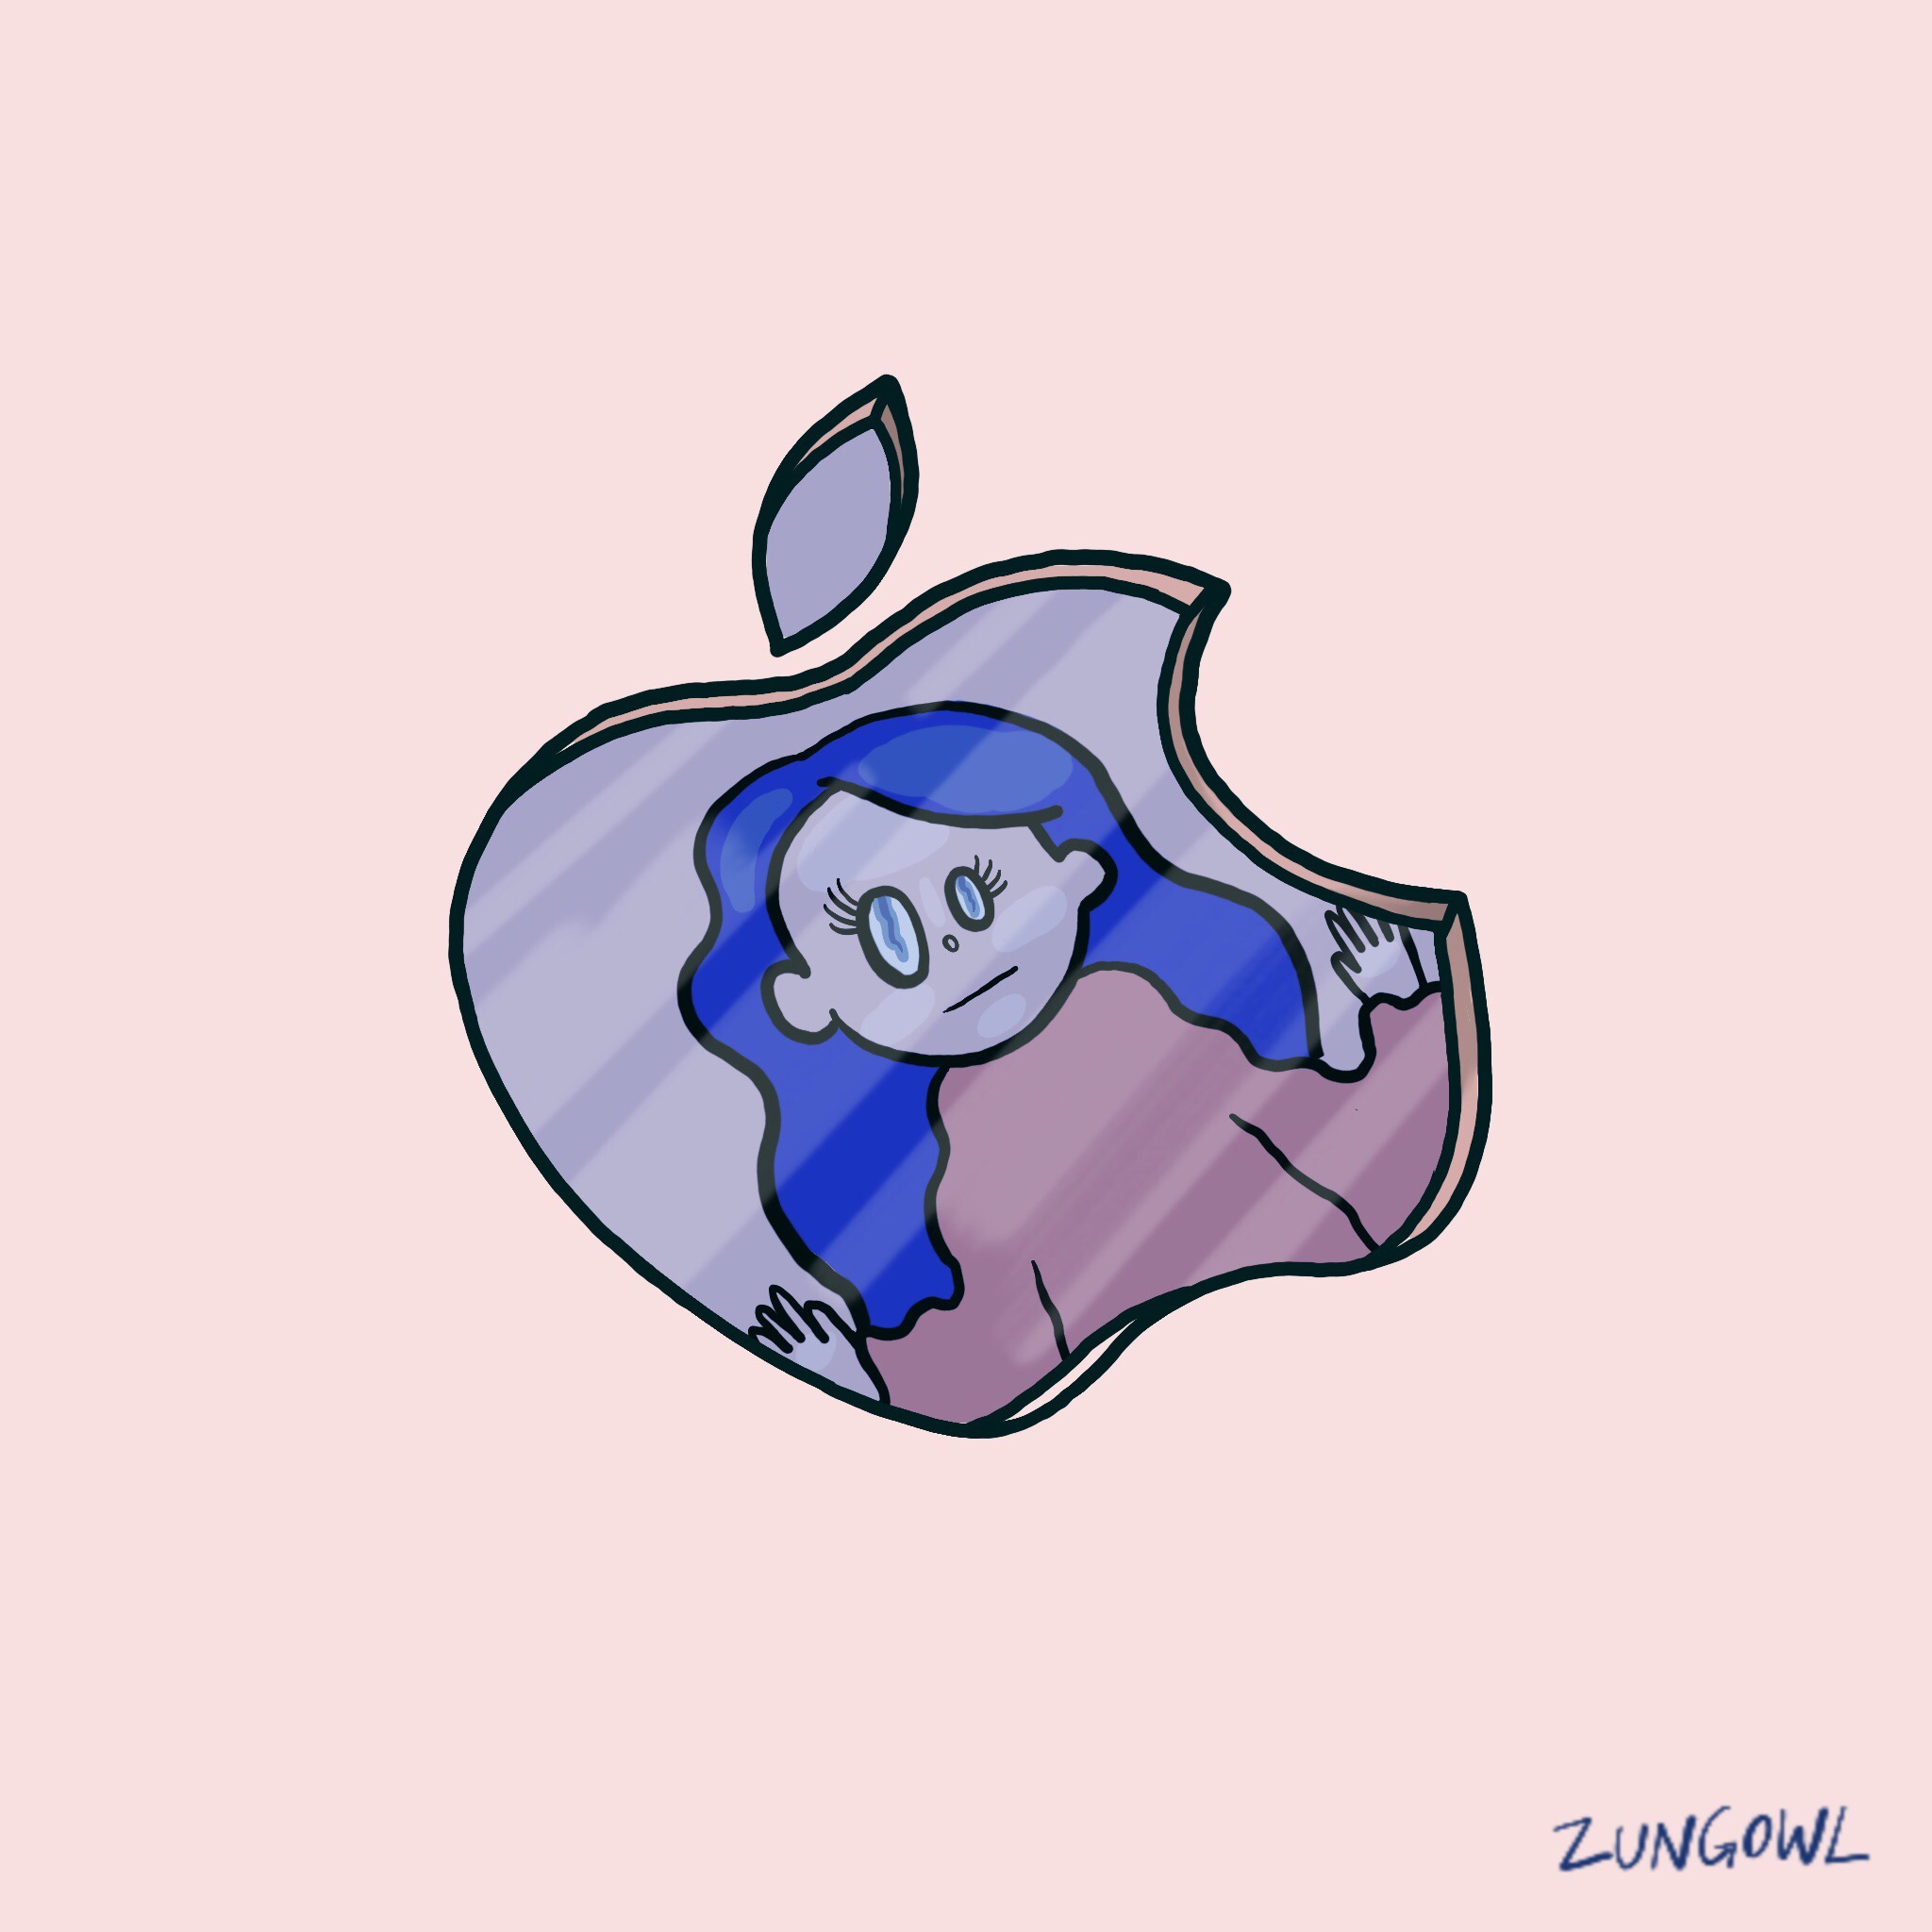 In apple